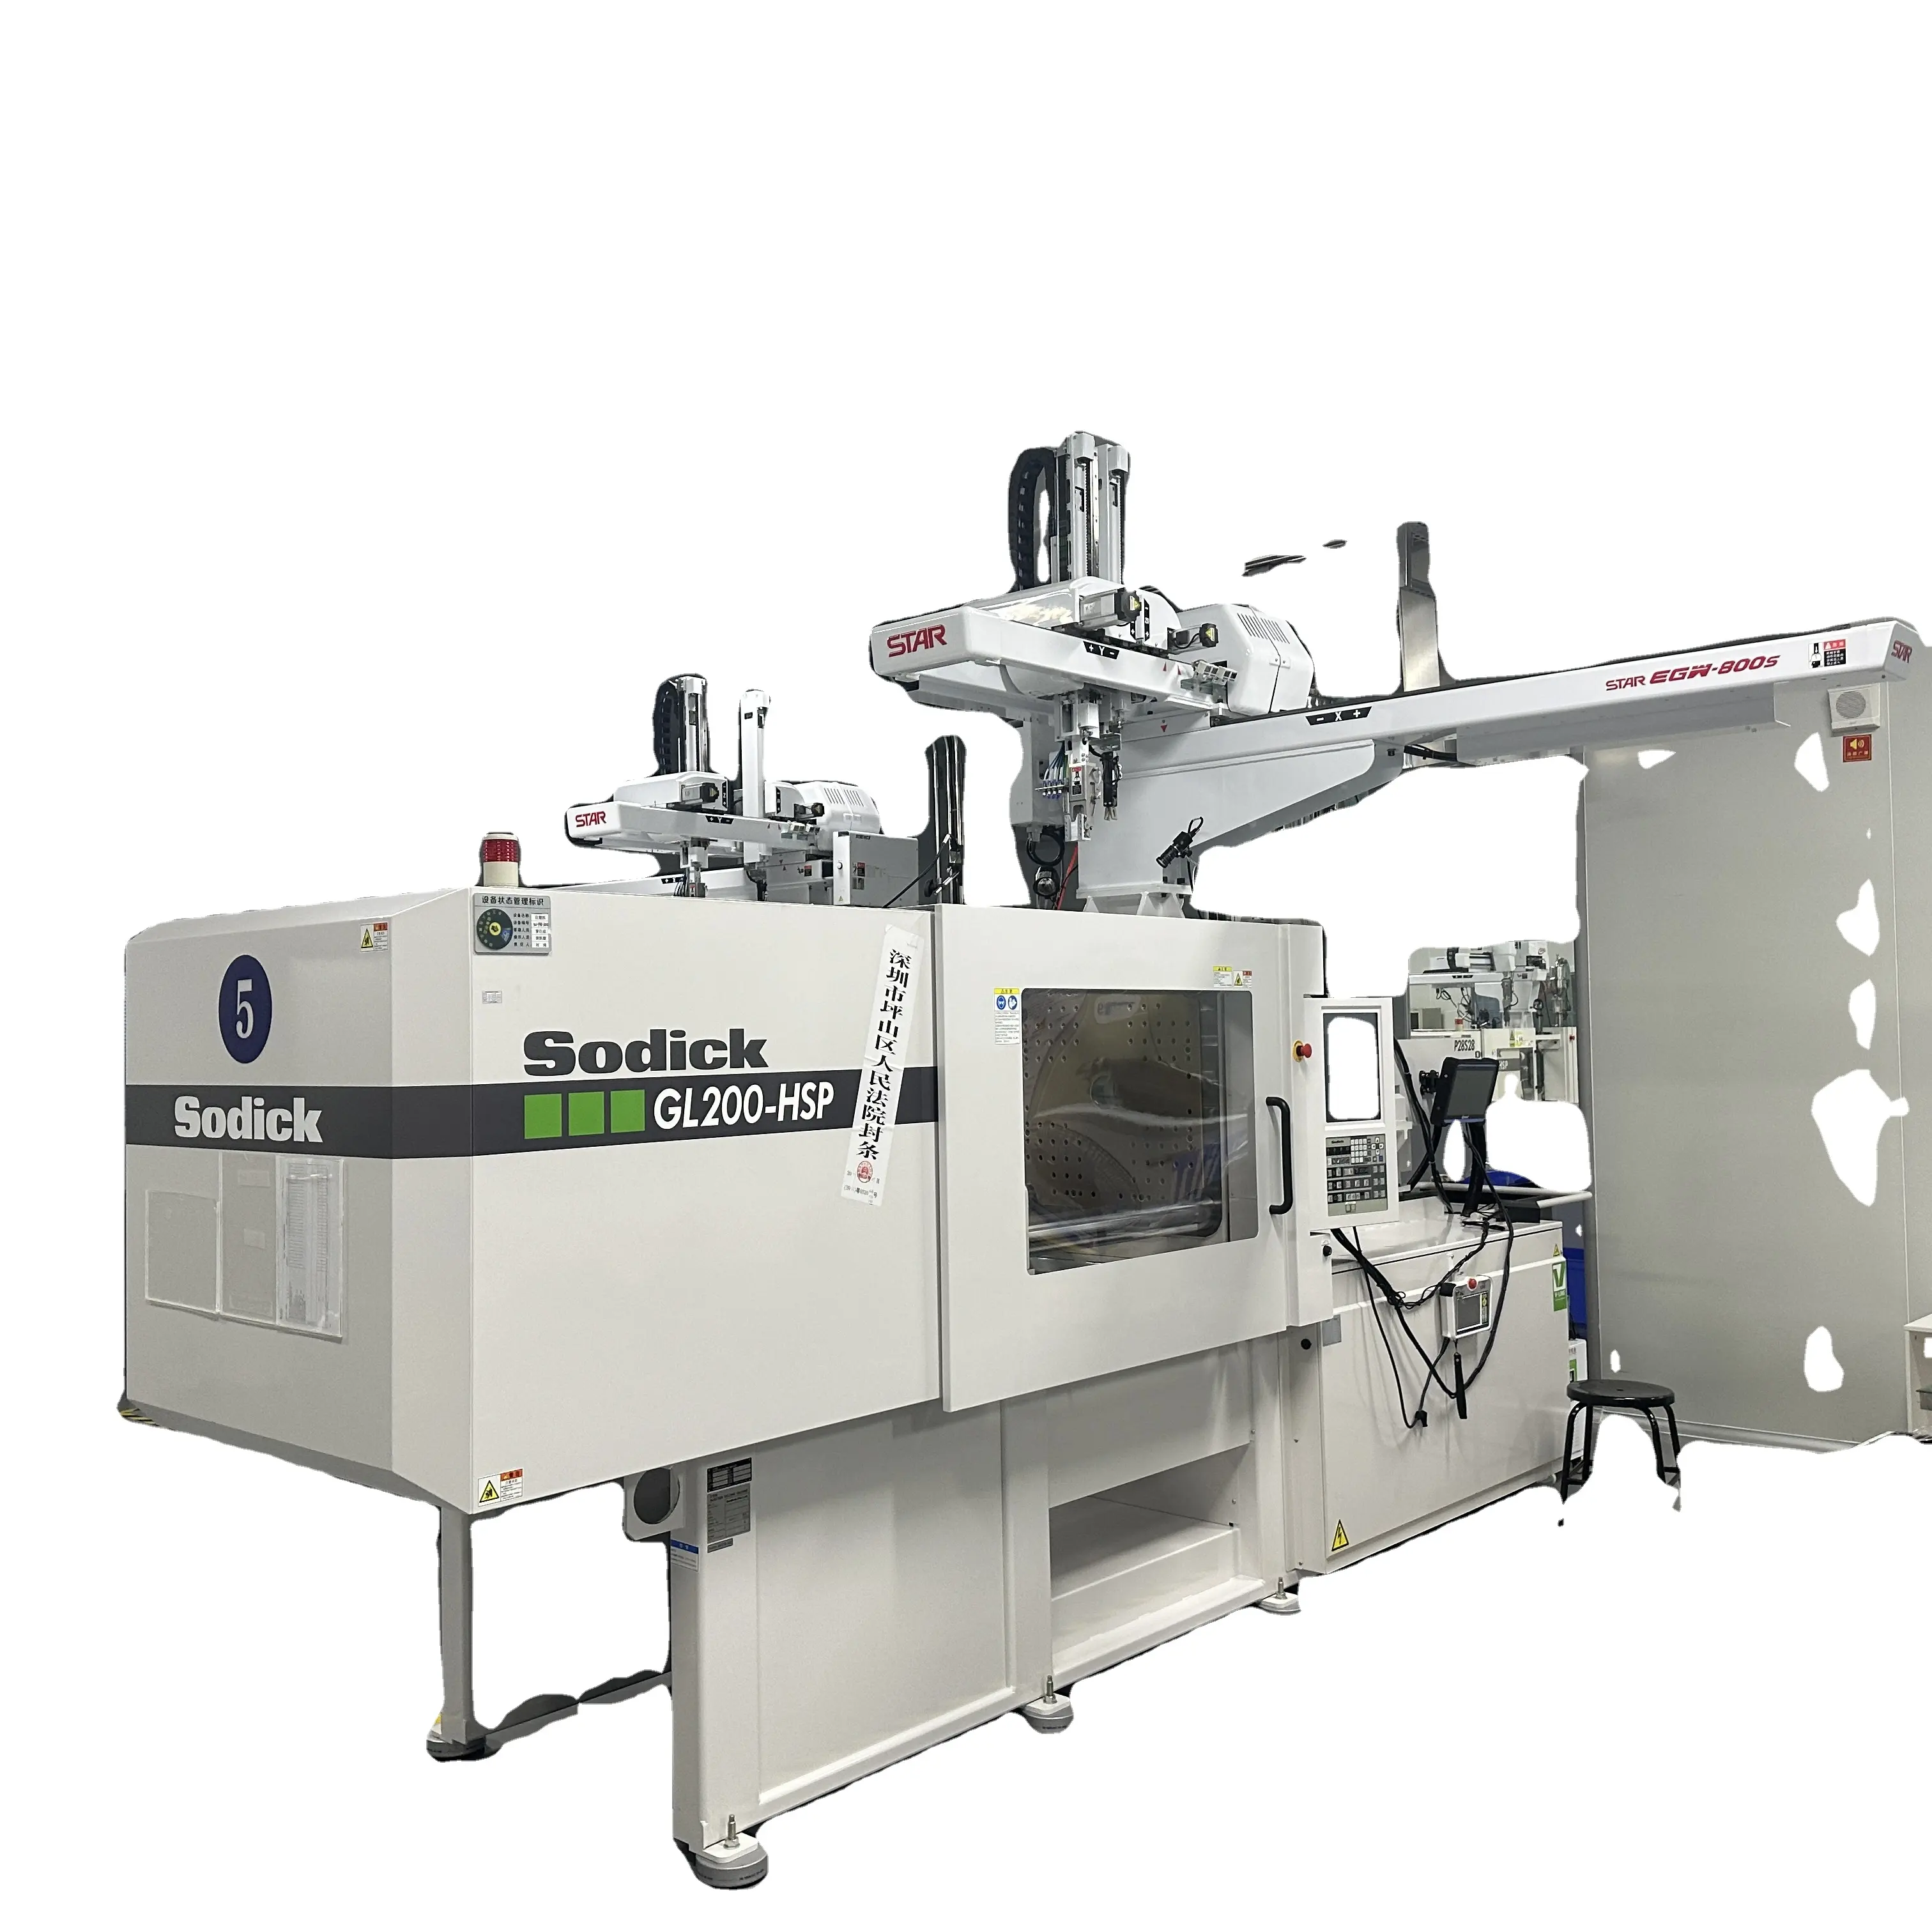 Sodick GL60-HSP 모델은 허스키 사출 성형 기계를 사용한 기계 새로운 품질 플라스틱 사출 기계